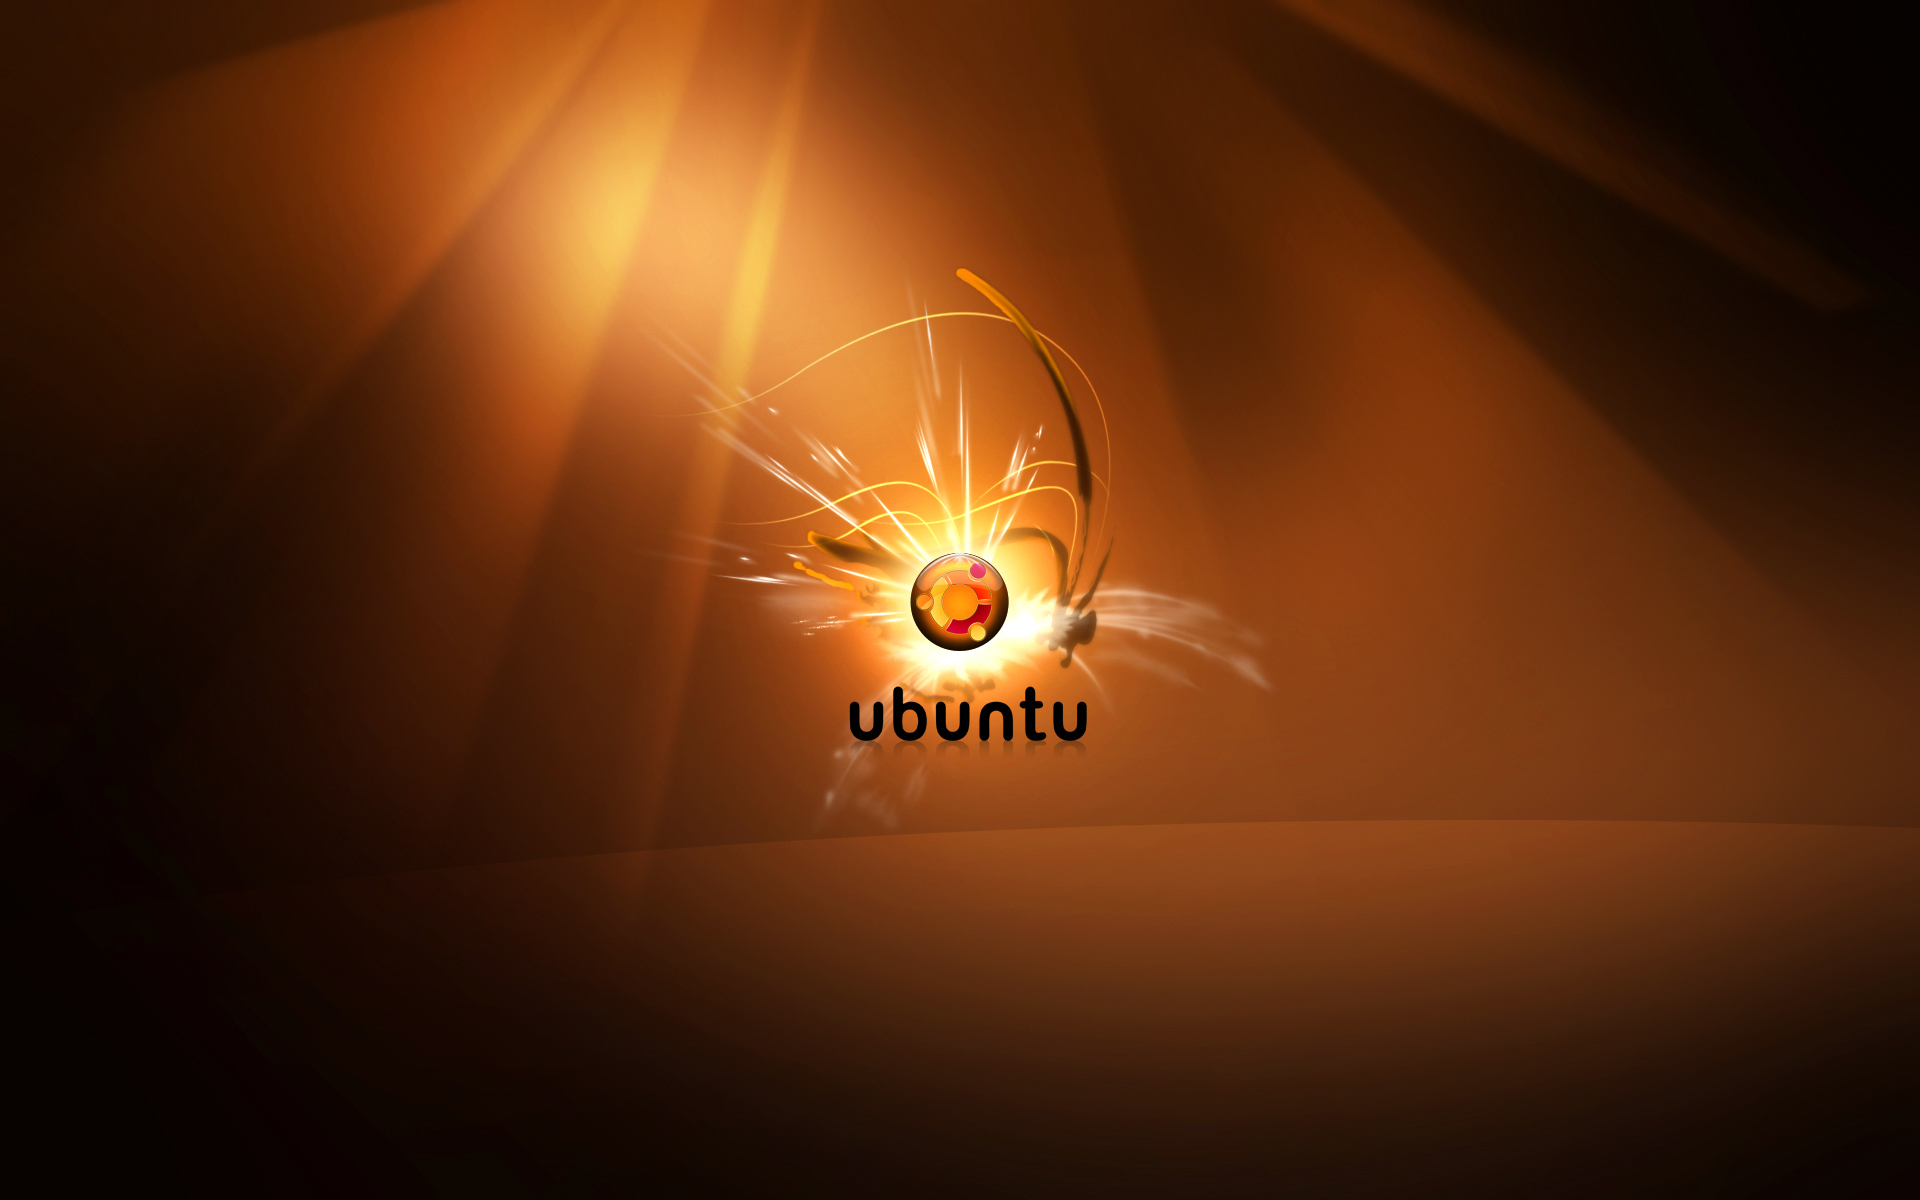  Incredible Ubuntu Wallpaper Collection Technosamrat